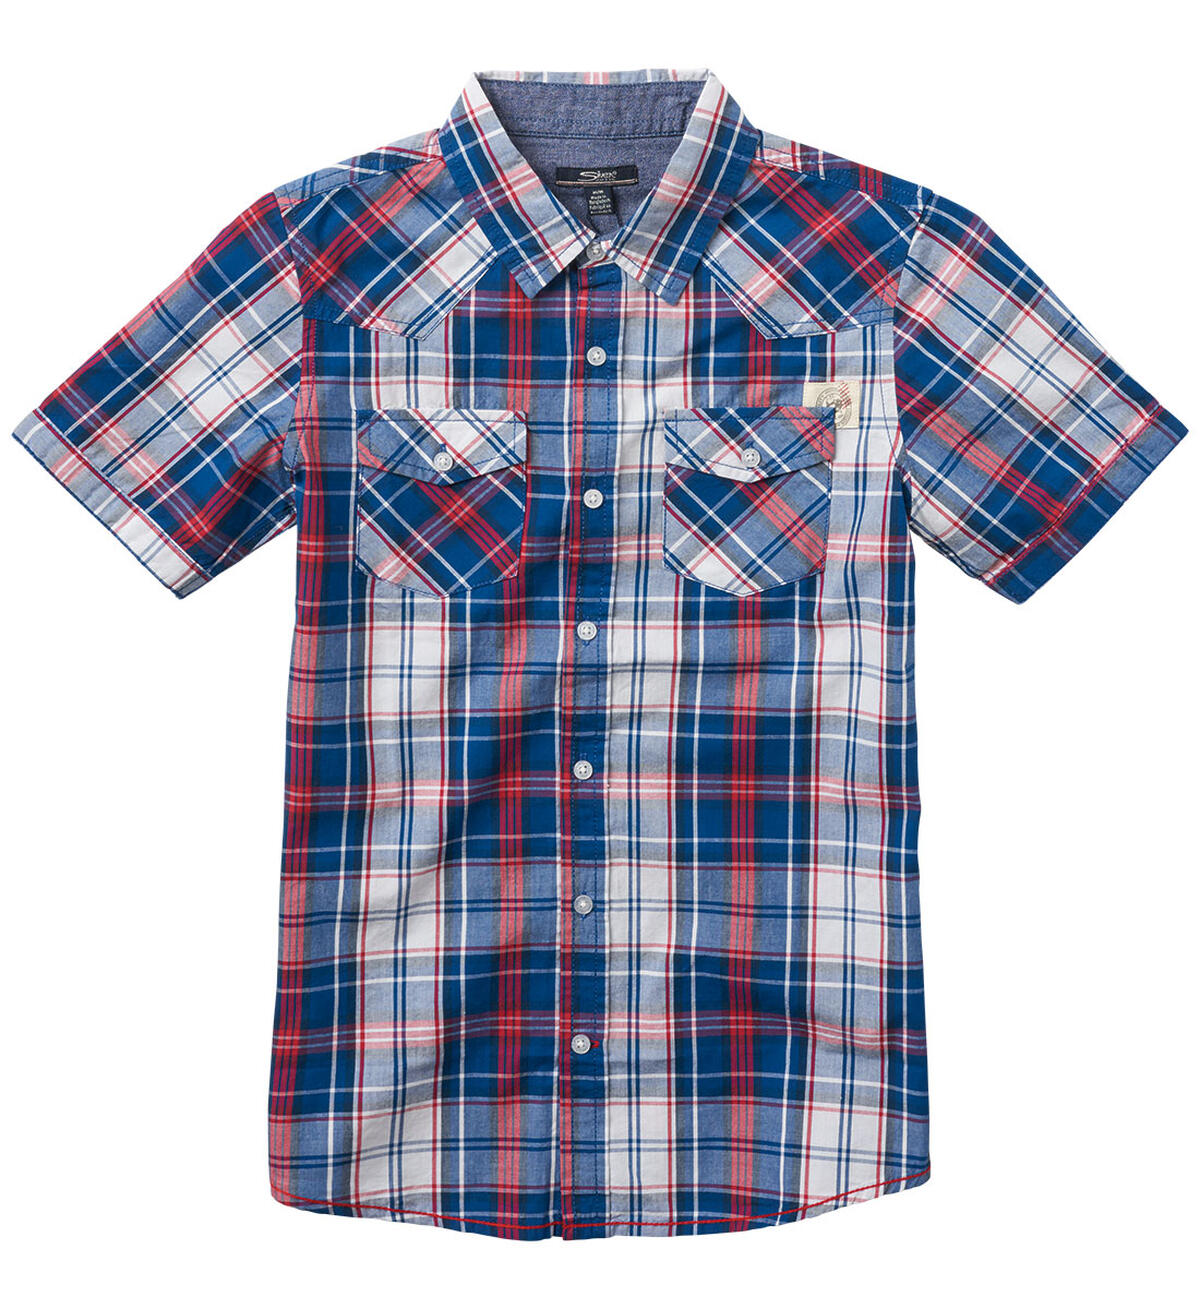 Short-Sleeve Plaid Shirt (7-16), , hi-res image number 0}